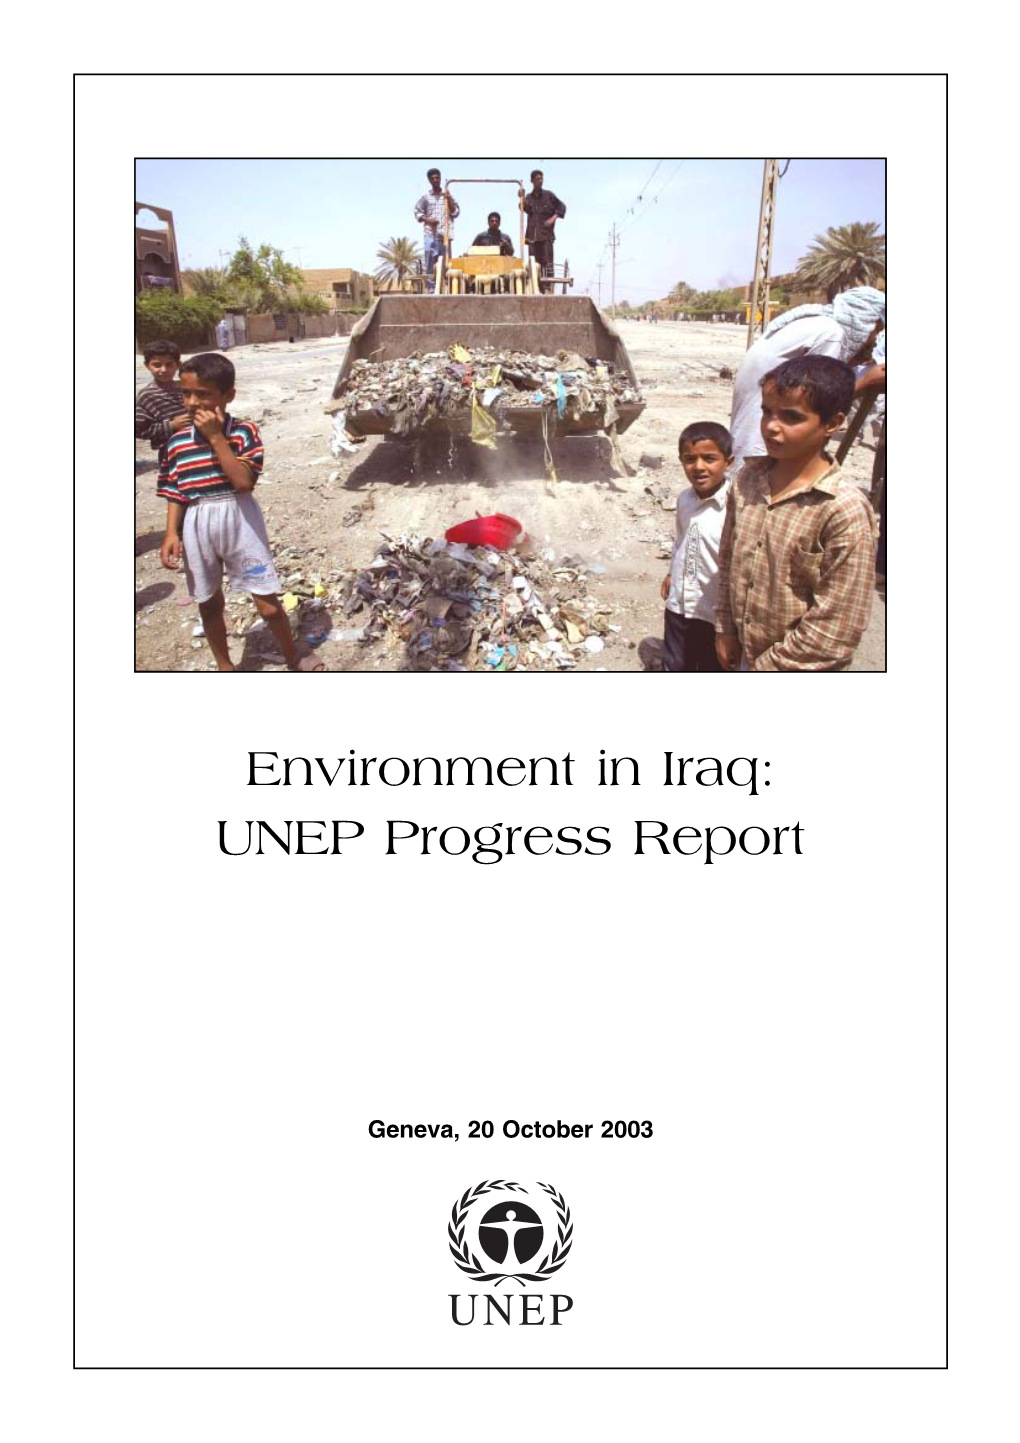 Iraq: UNEP Progress Report